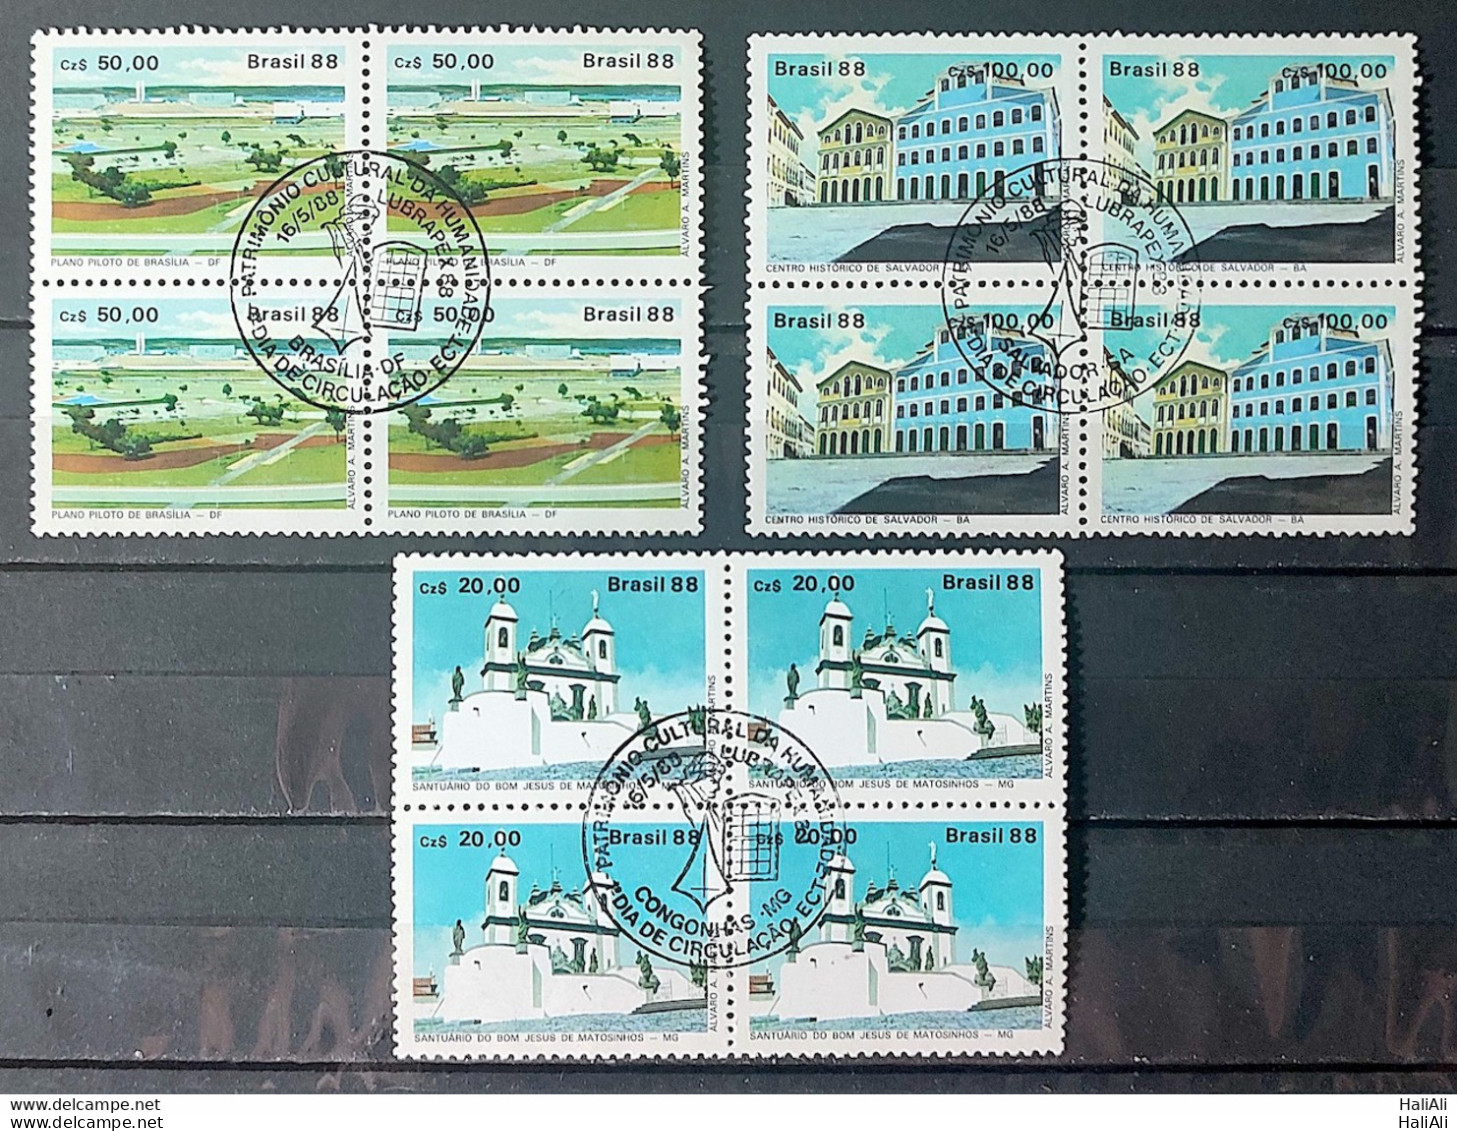 C 1585 Brazil Stamp Lubrapex Portugal Jorge Amado Brasilia 1988 Block Of 4 CBC MG DF BA Full Series - Neufs